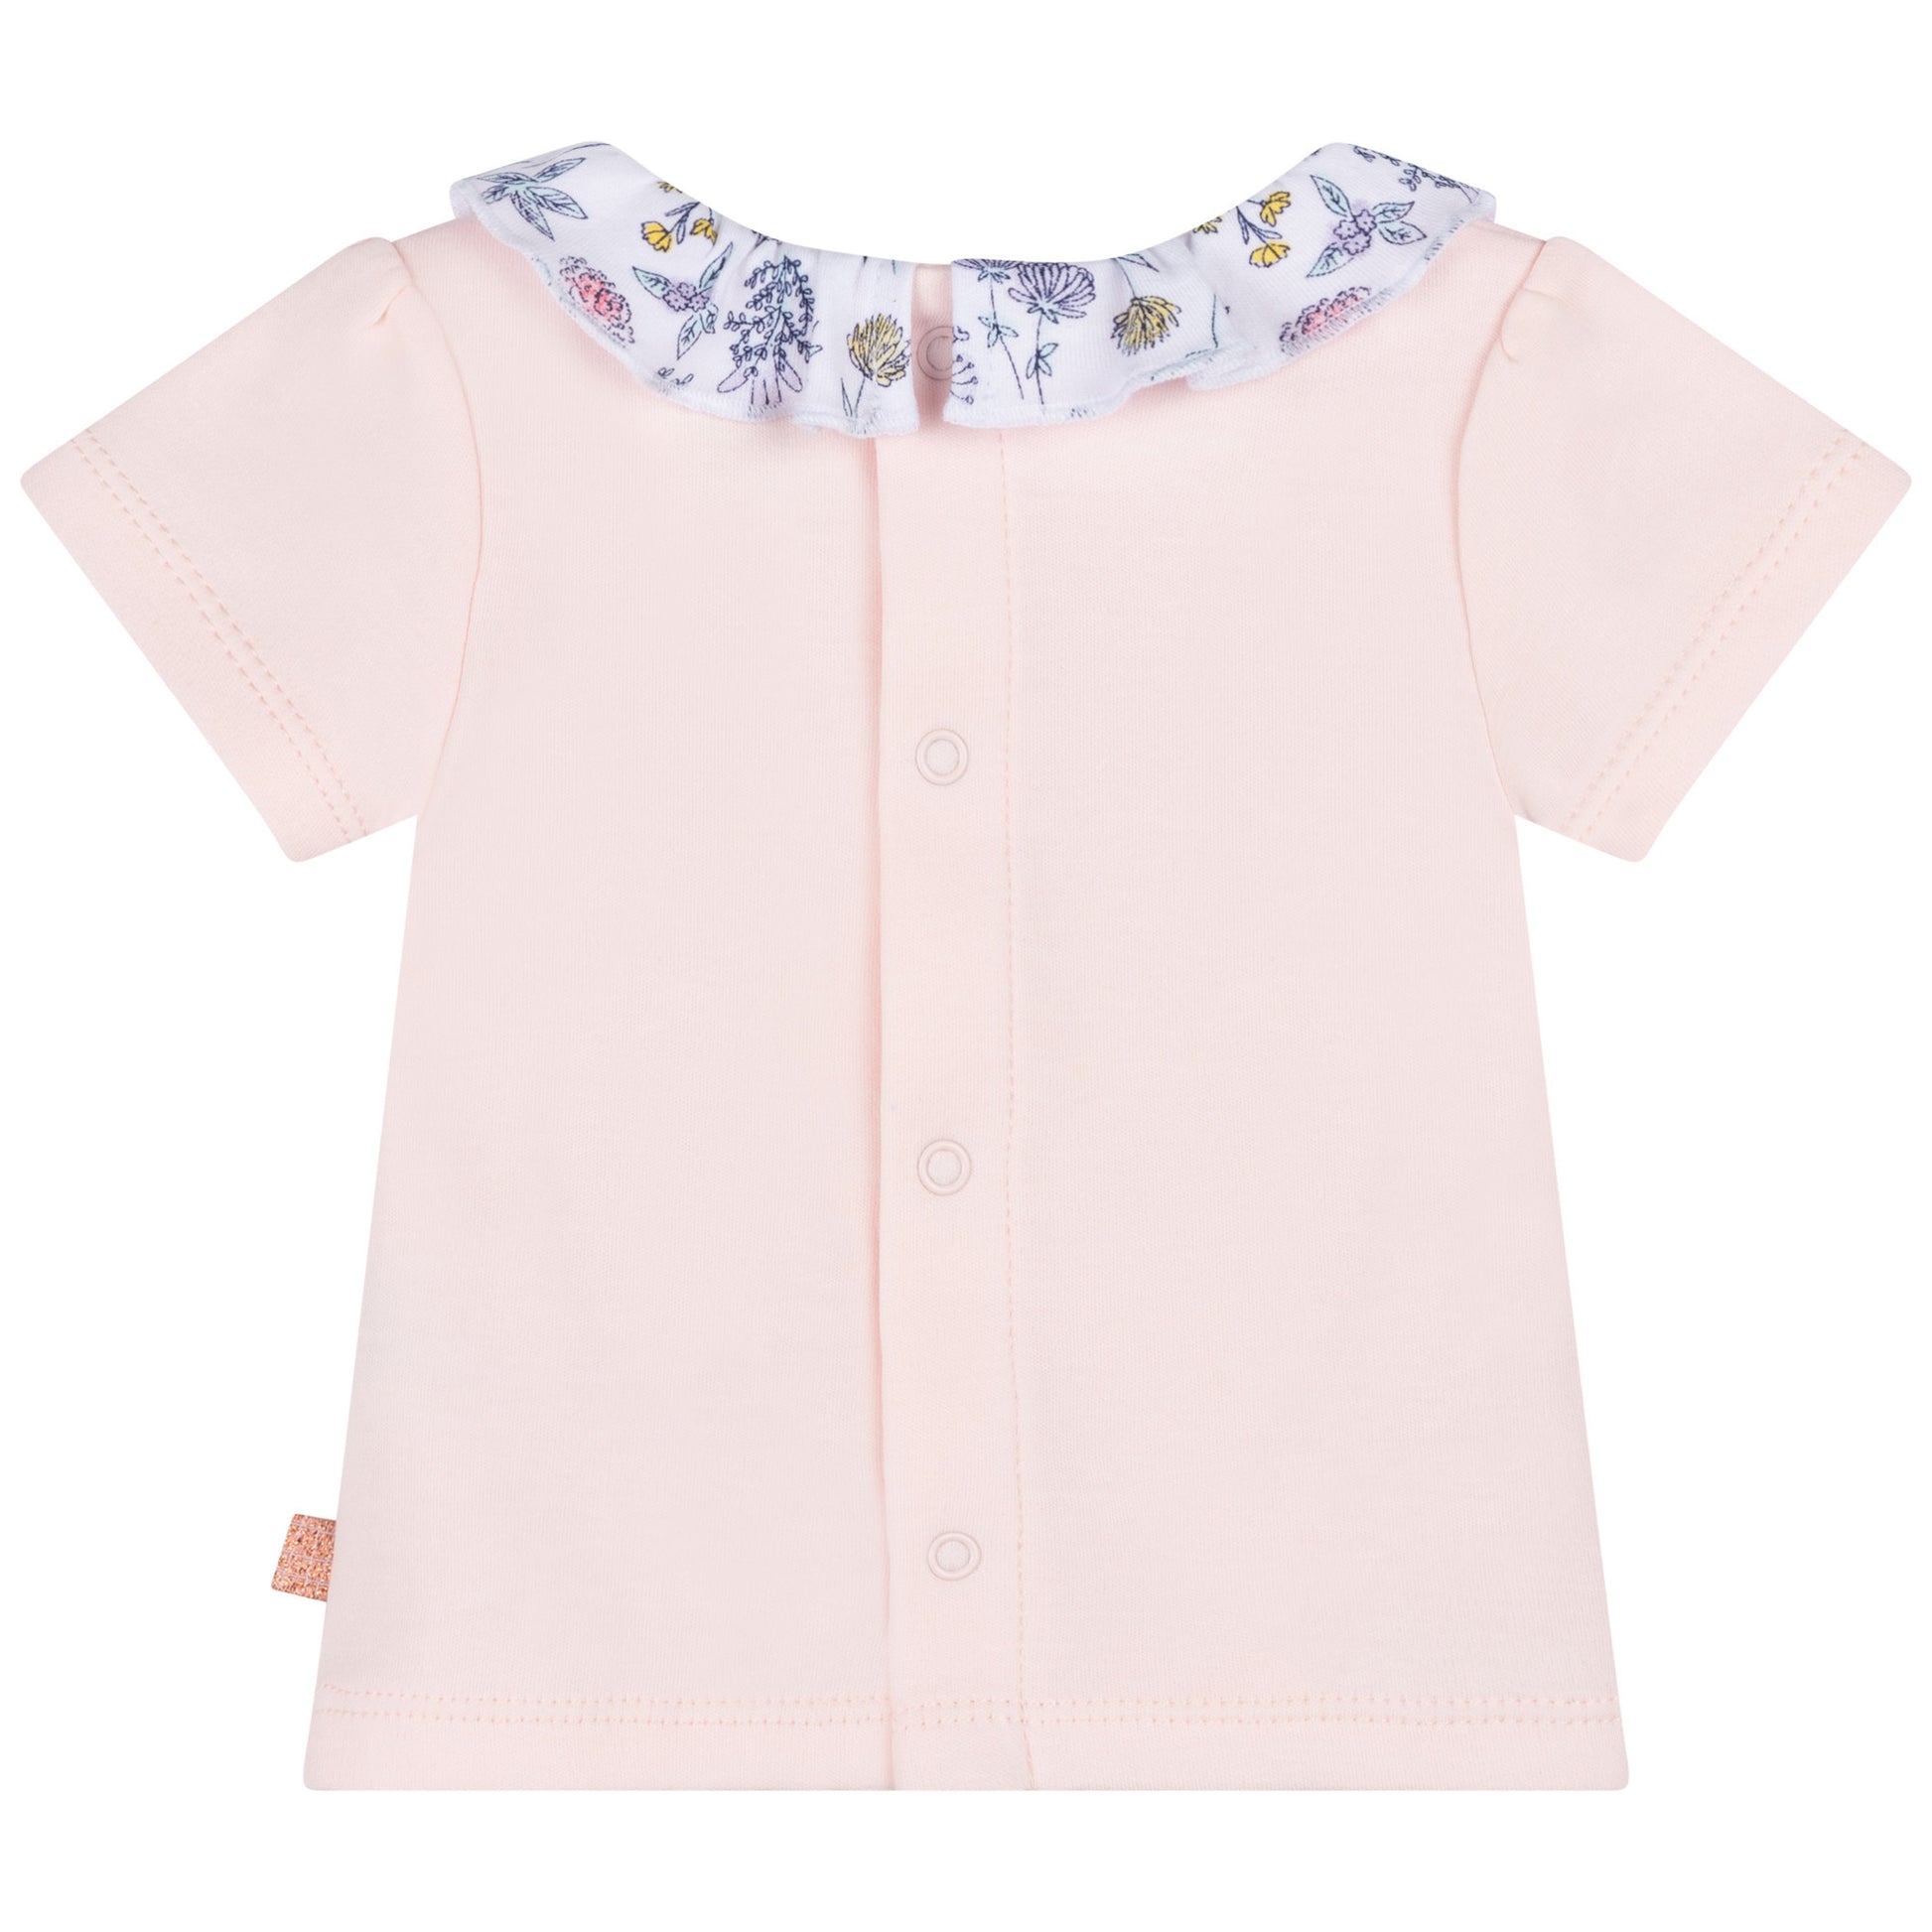 T-Shirt and Spring floral short set - Little Hero Kids